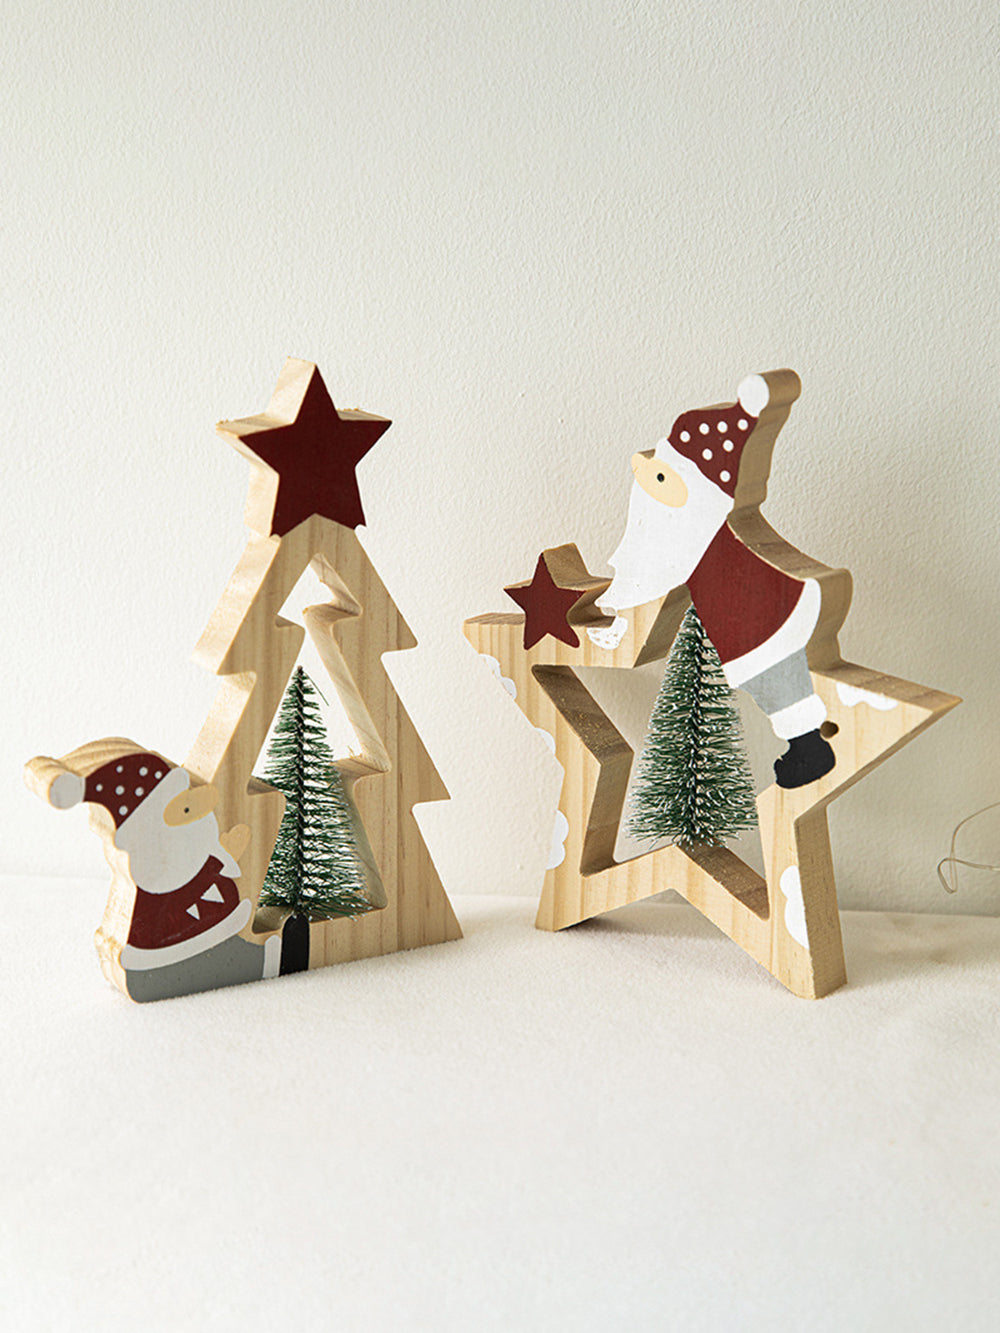 Enfeites de estrela de cinco pontas de madeira do Papai Noel